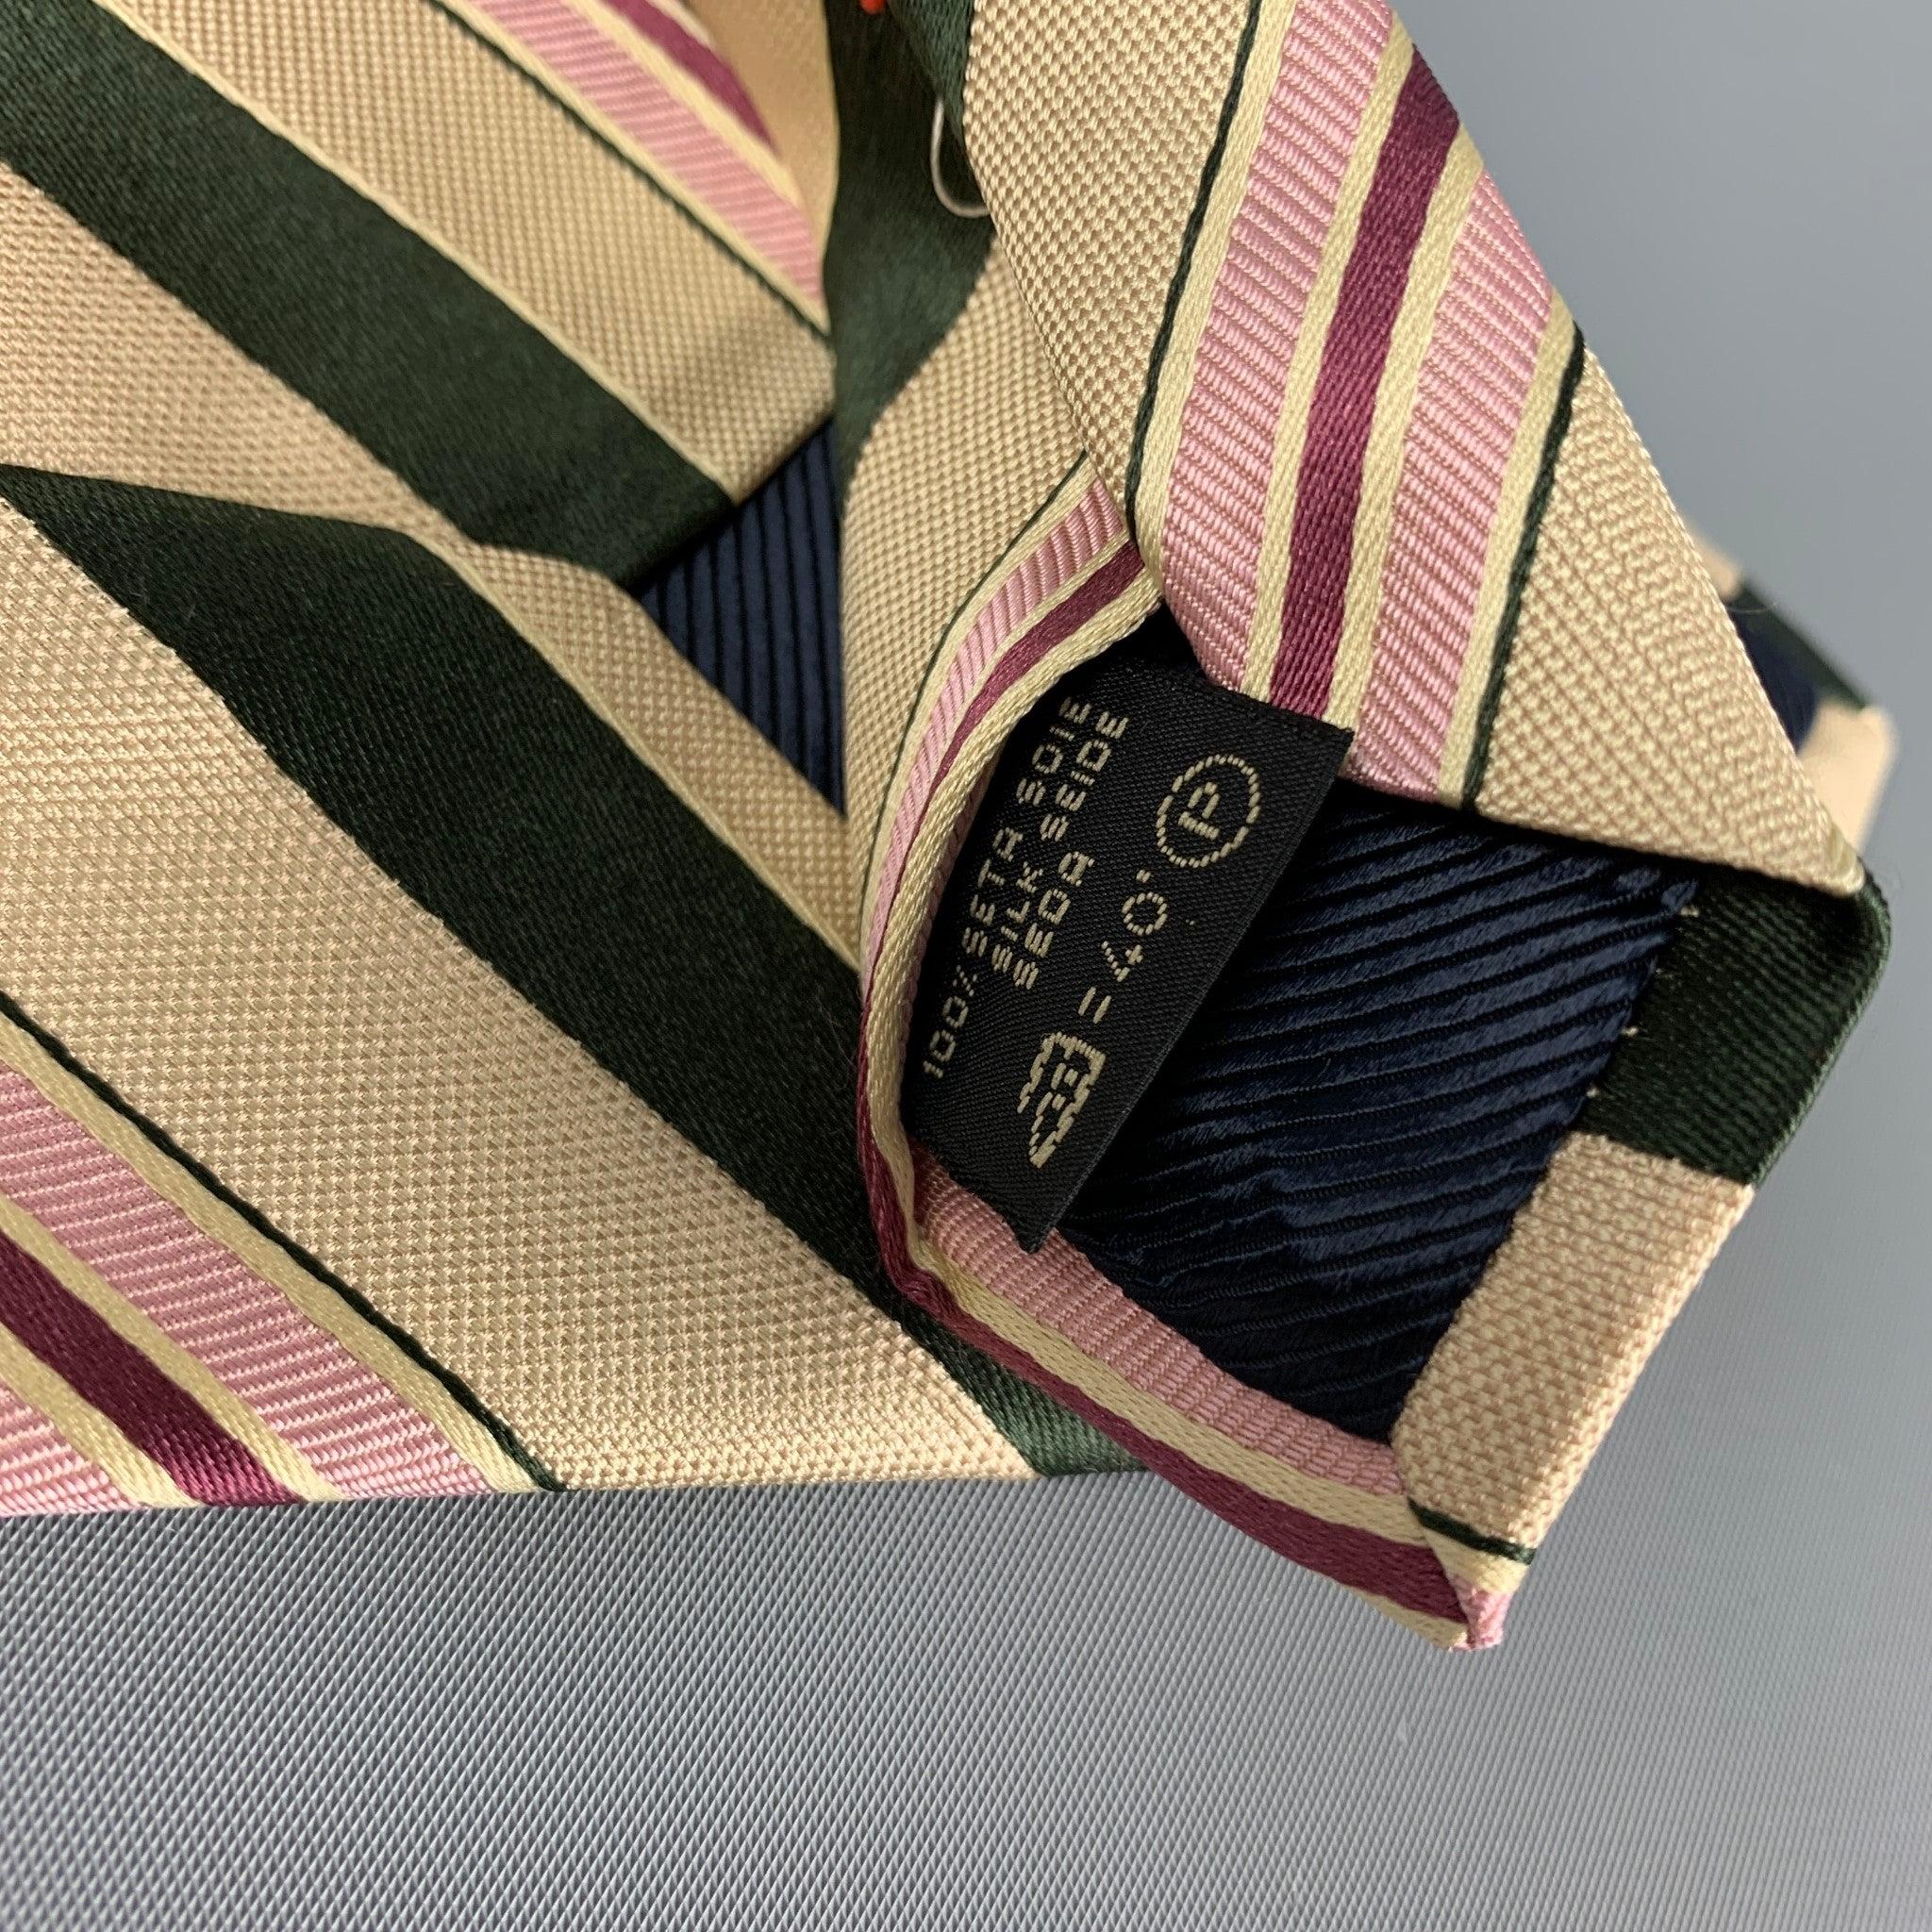 ERMENEGILDO ZEGNA for WILKES BASHFORD Beige Black Pink Diagonal Stripe Silk Tie In Good Condition For Sale In San Francisco, CA